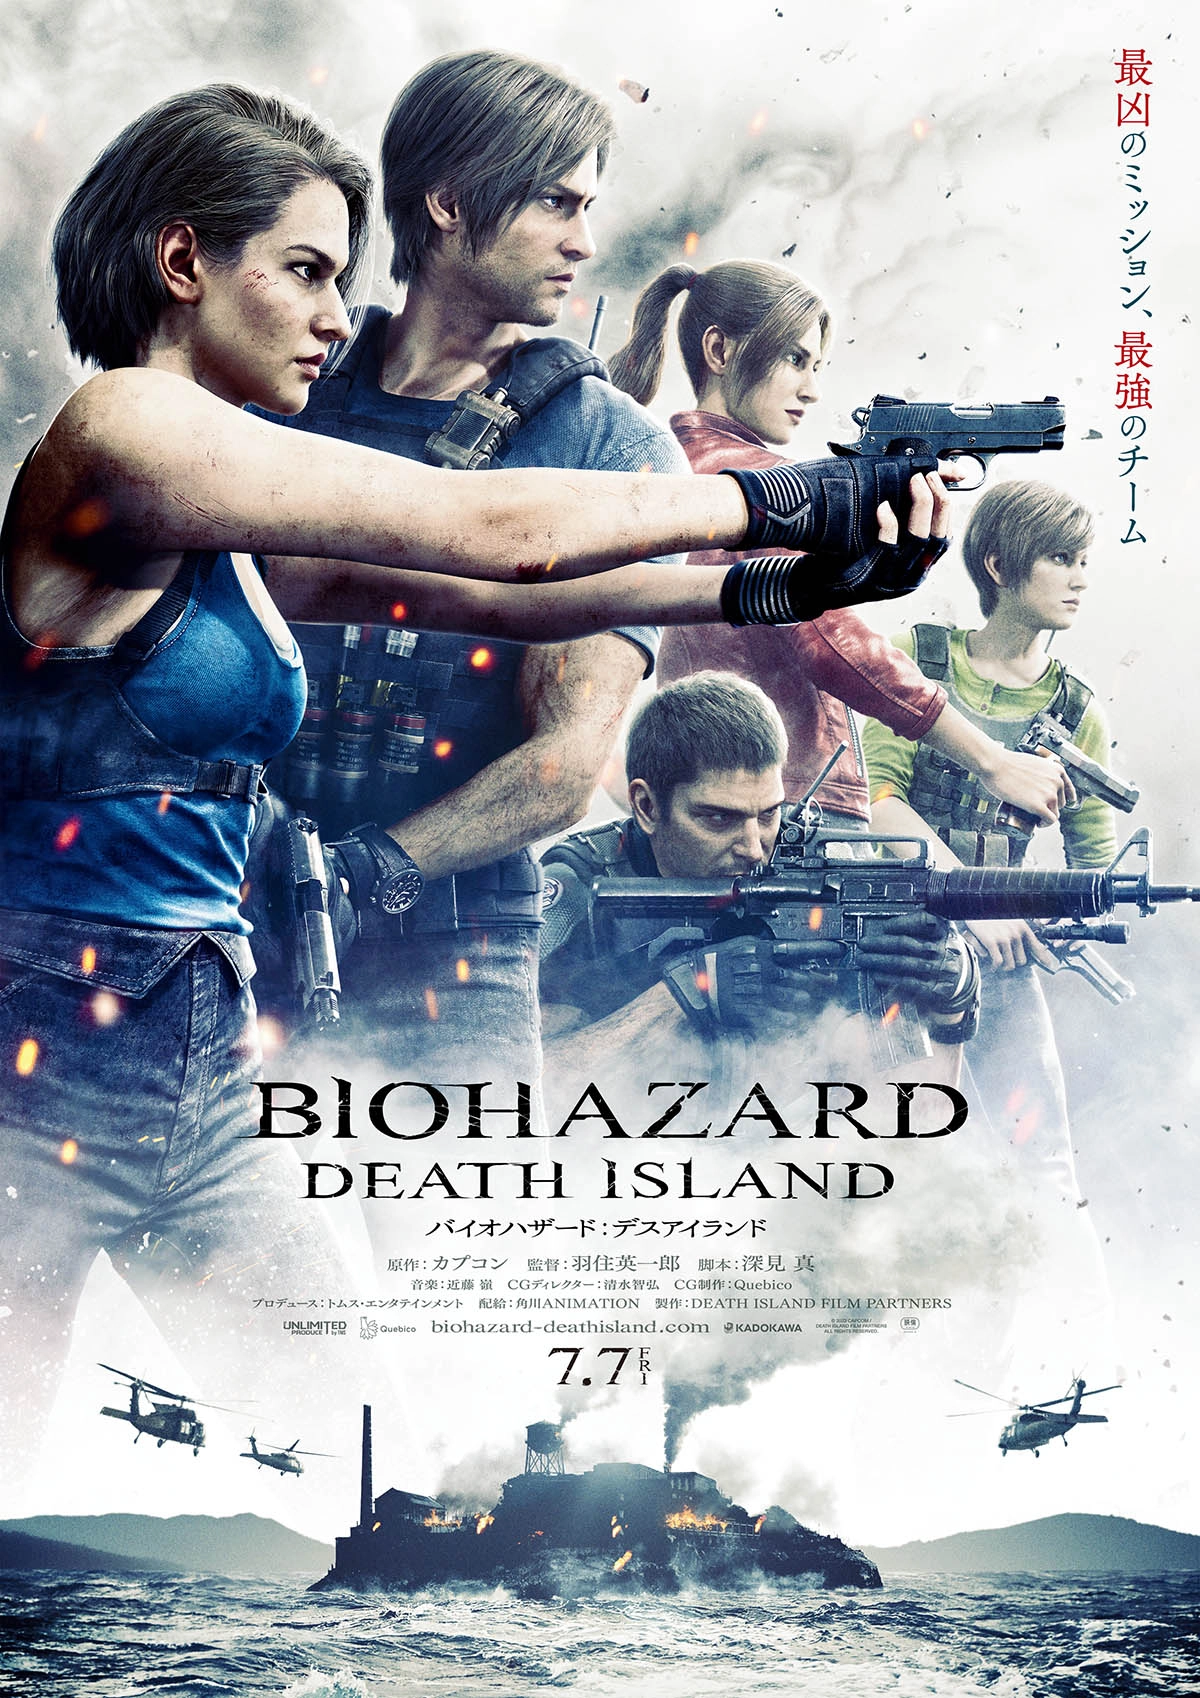 Póster de la película Resident Evil: Death Island